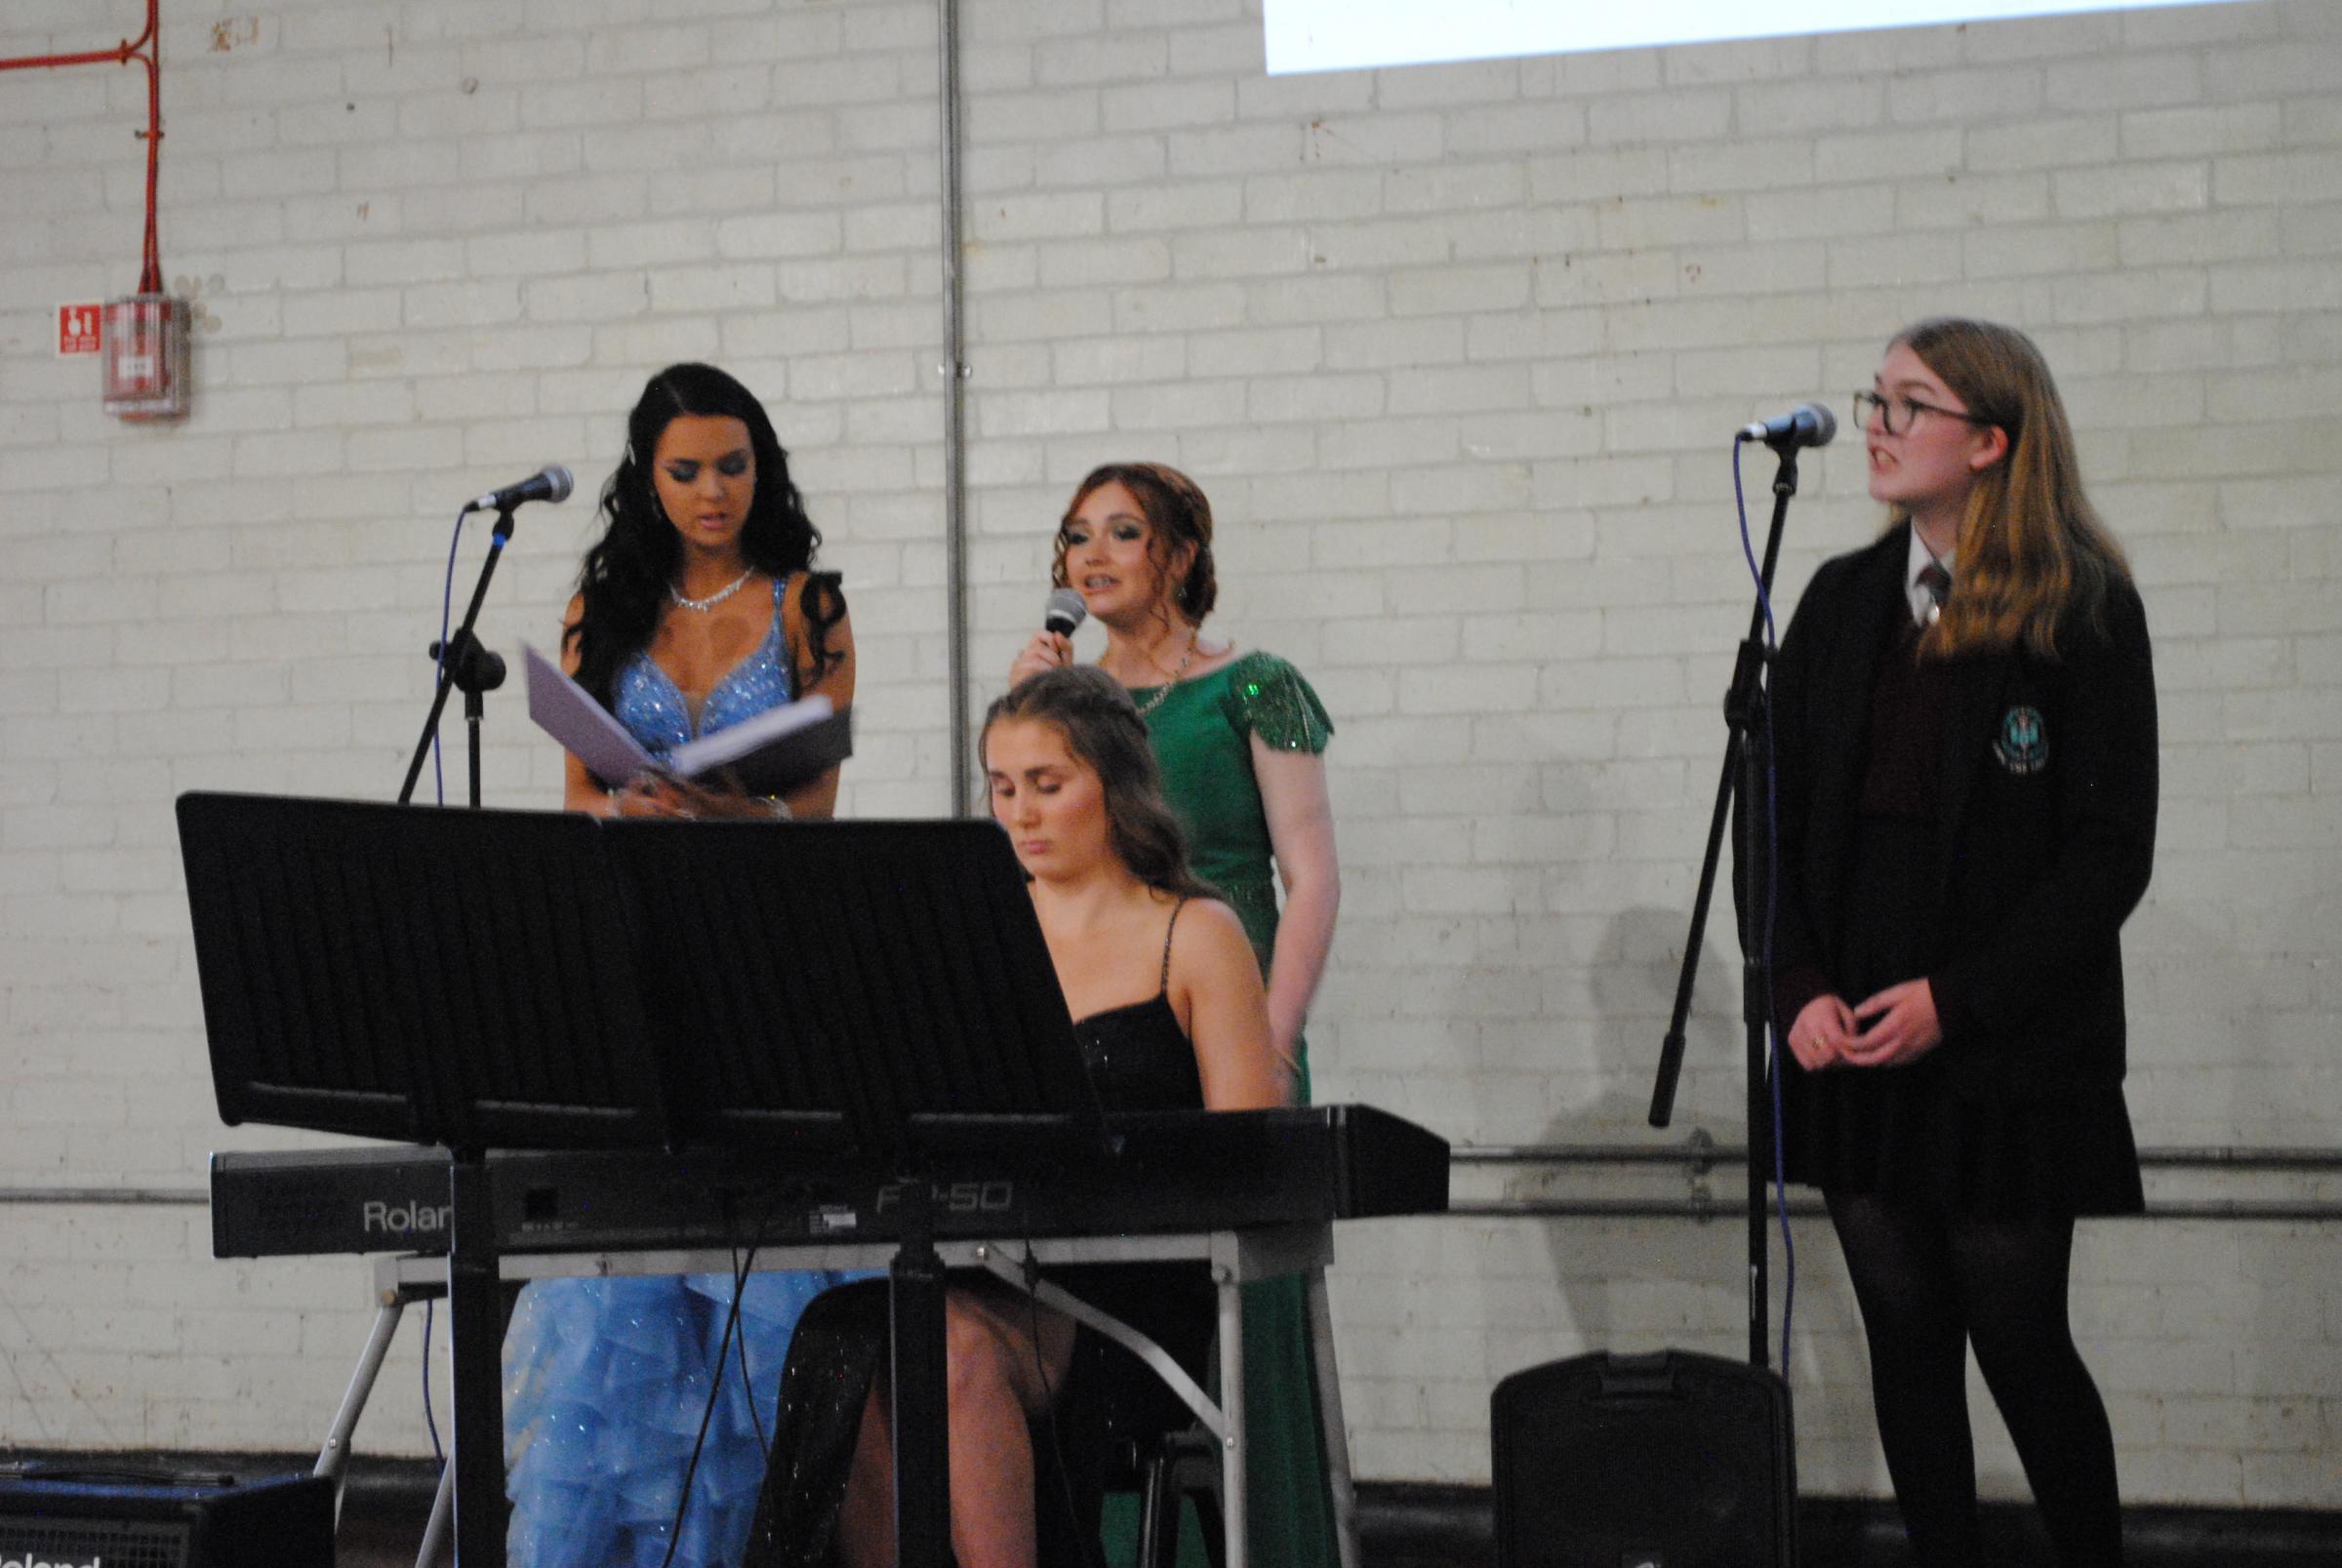 Olivia Bateman, Stevie Duncan and Adele Crimes perform ‘Hallelujah’ accompanied by Megan Pearson on the keyboard.